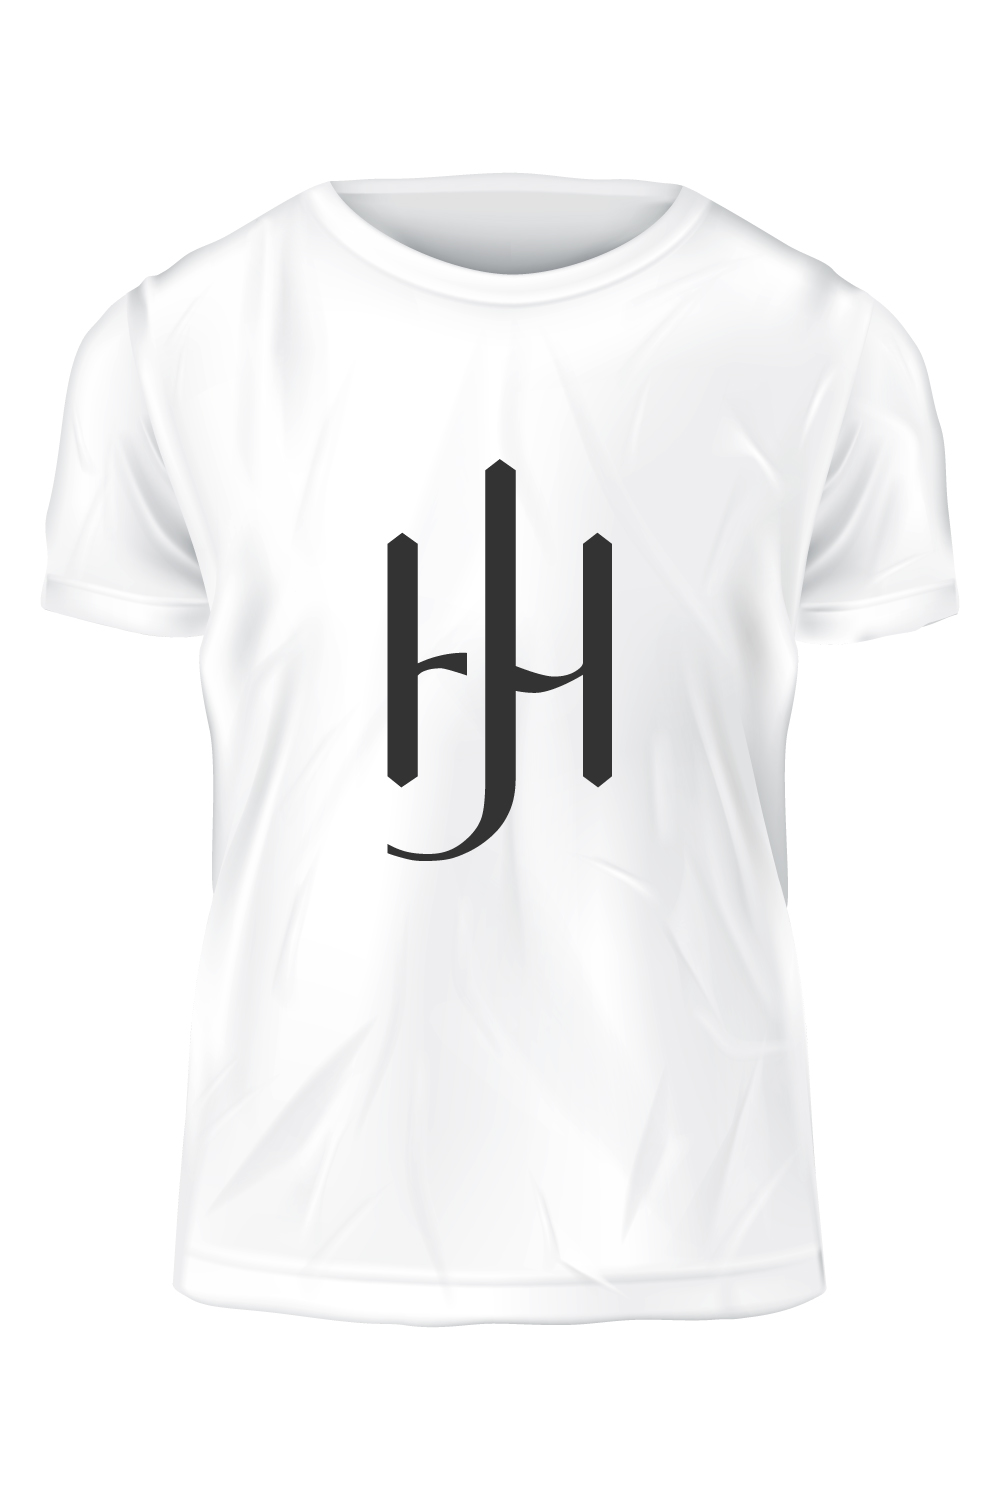 HJ logo design pinterest preview image.